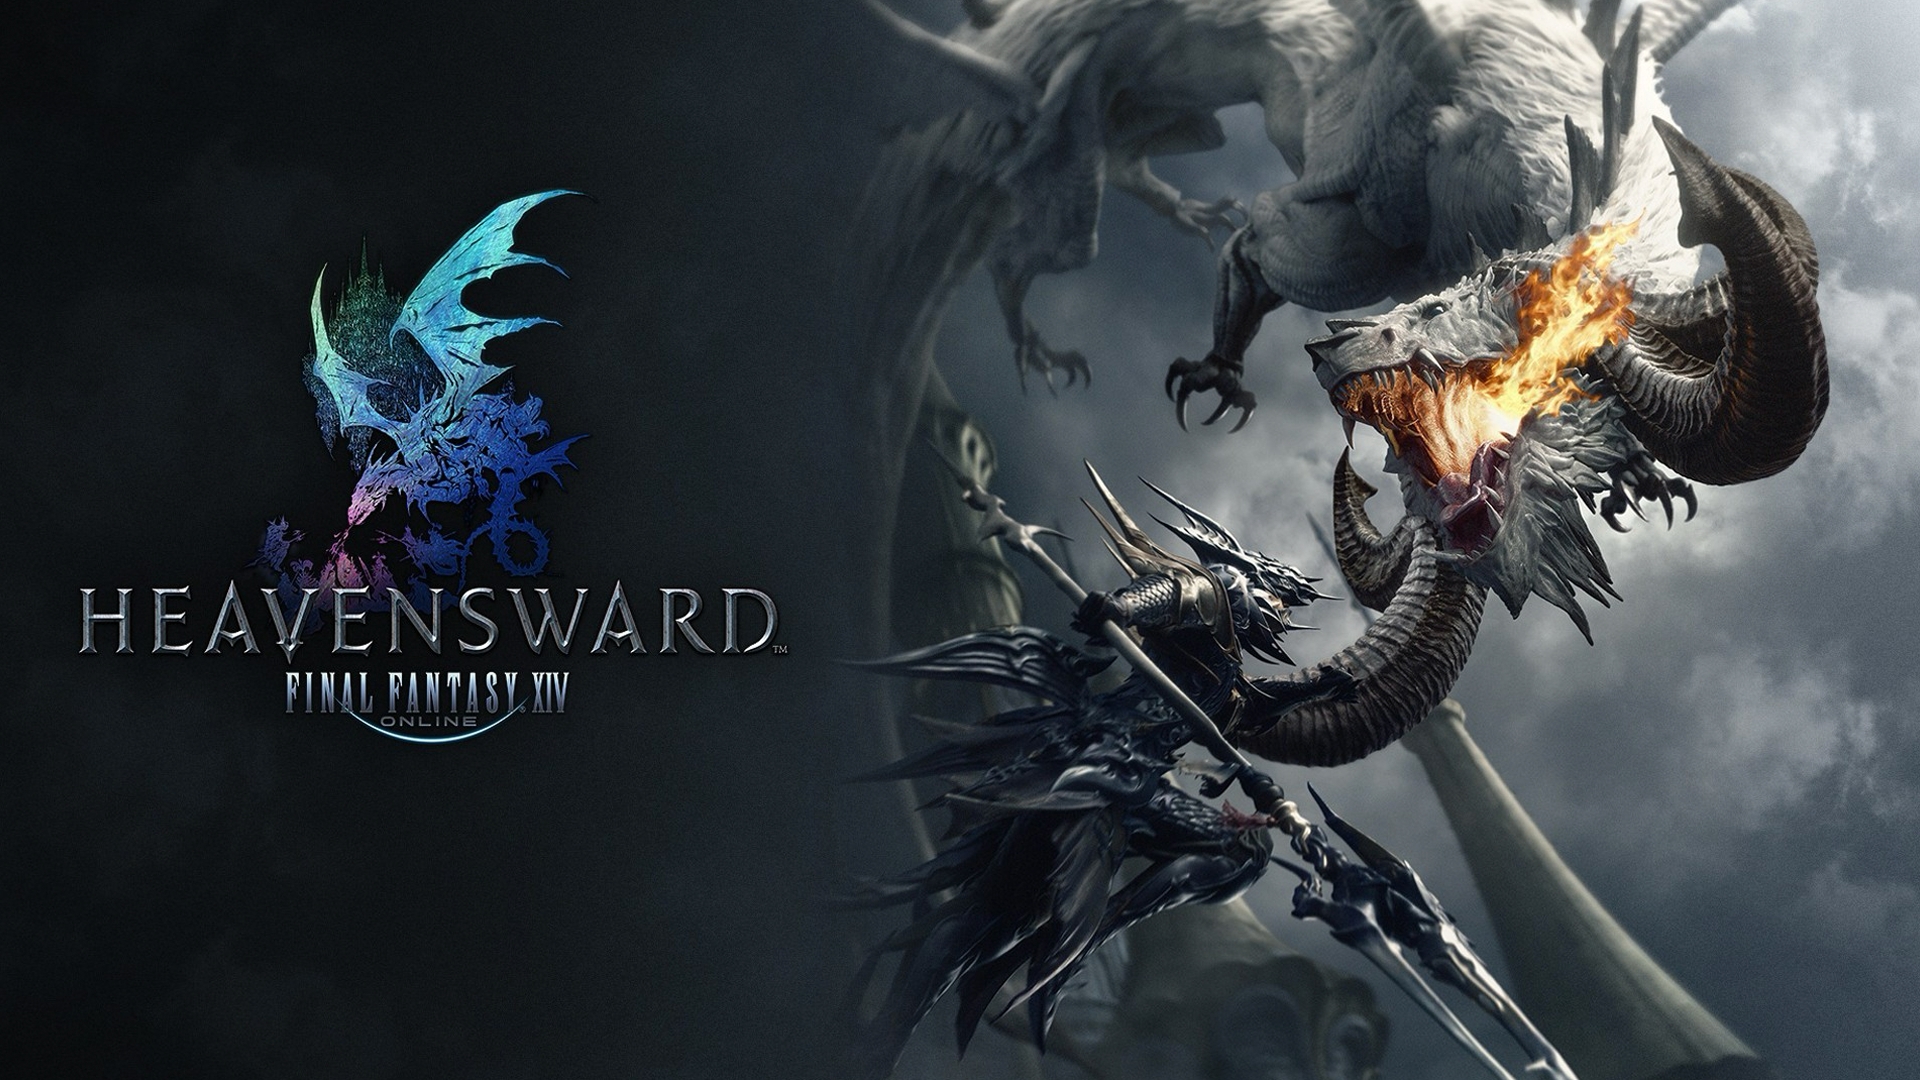 Buy Final Fantasy Xiv A Realm Reborn Heavensward Other